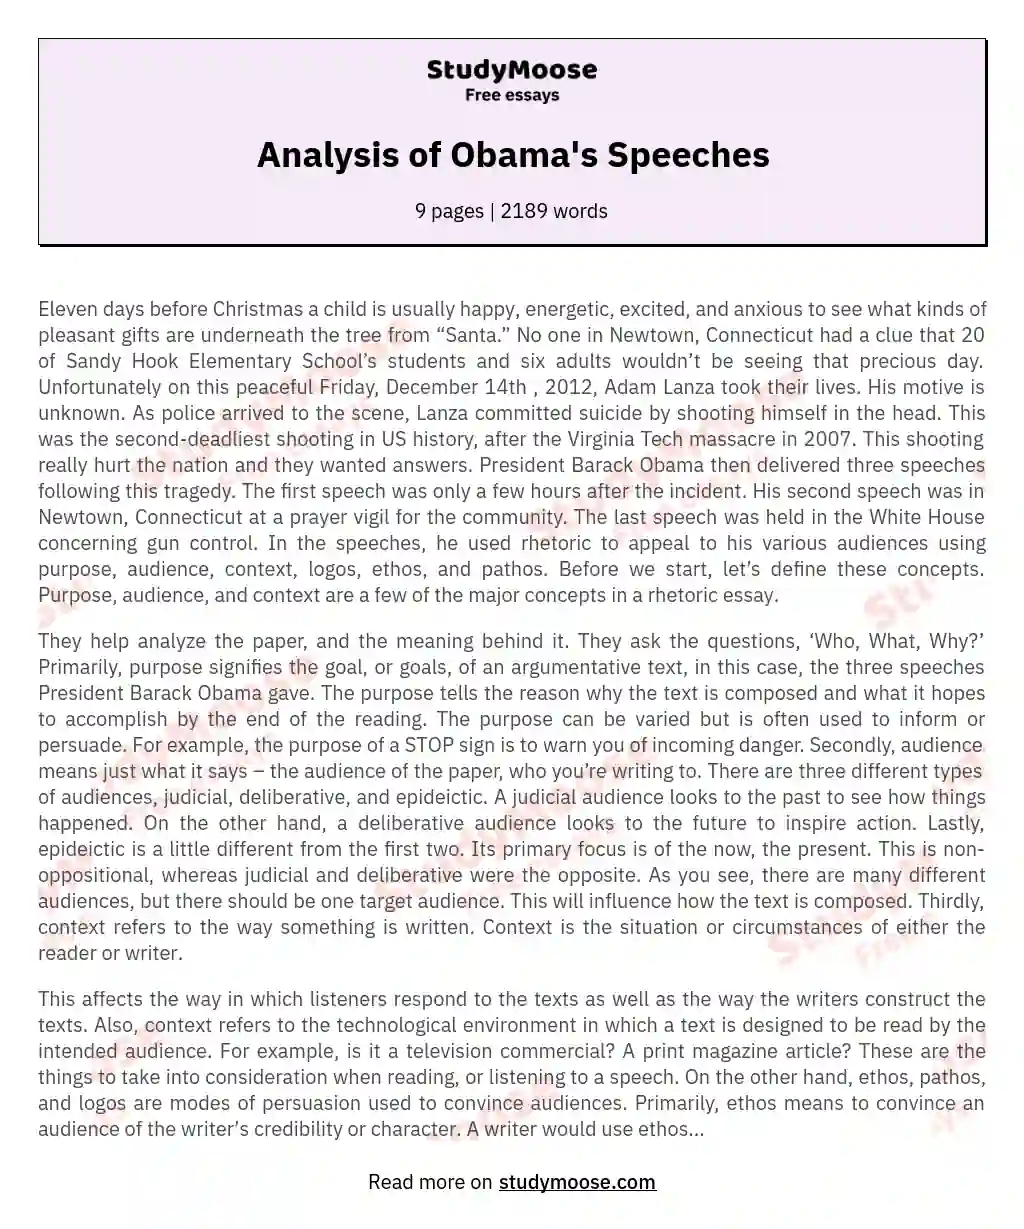 Analysis of Obama's Speeches essay